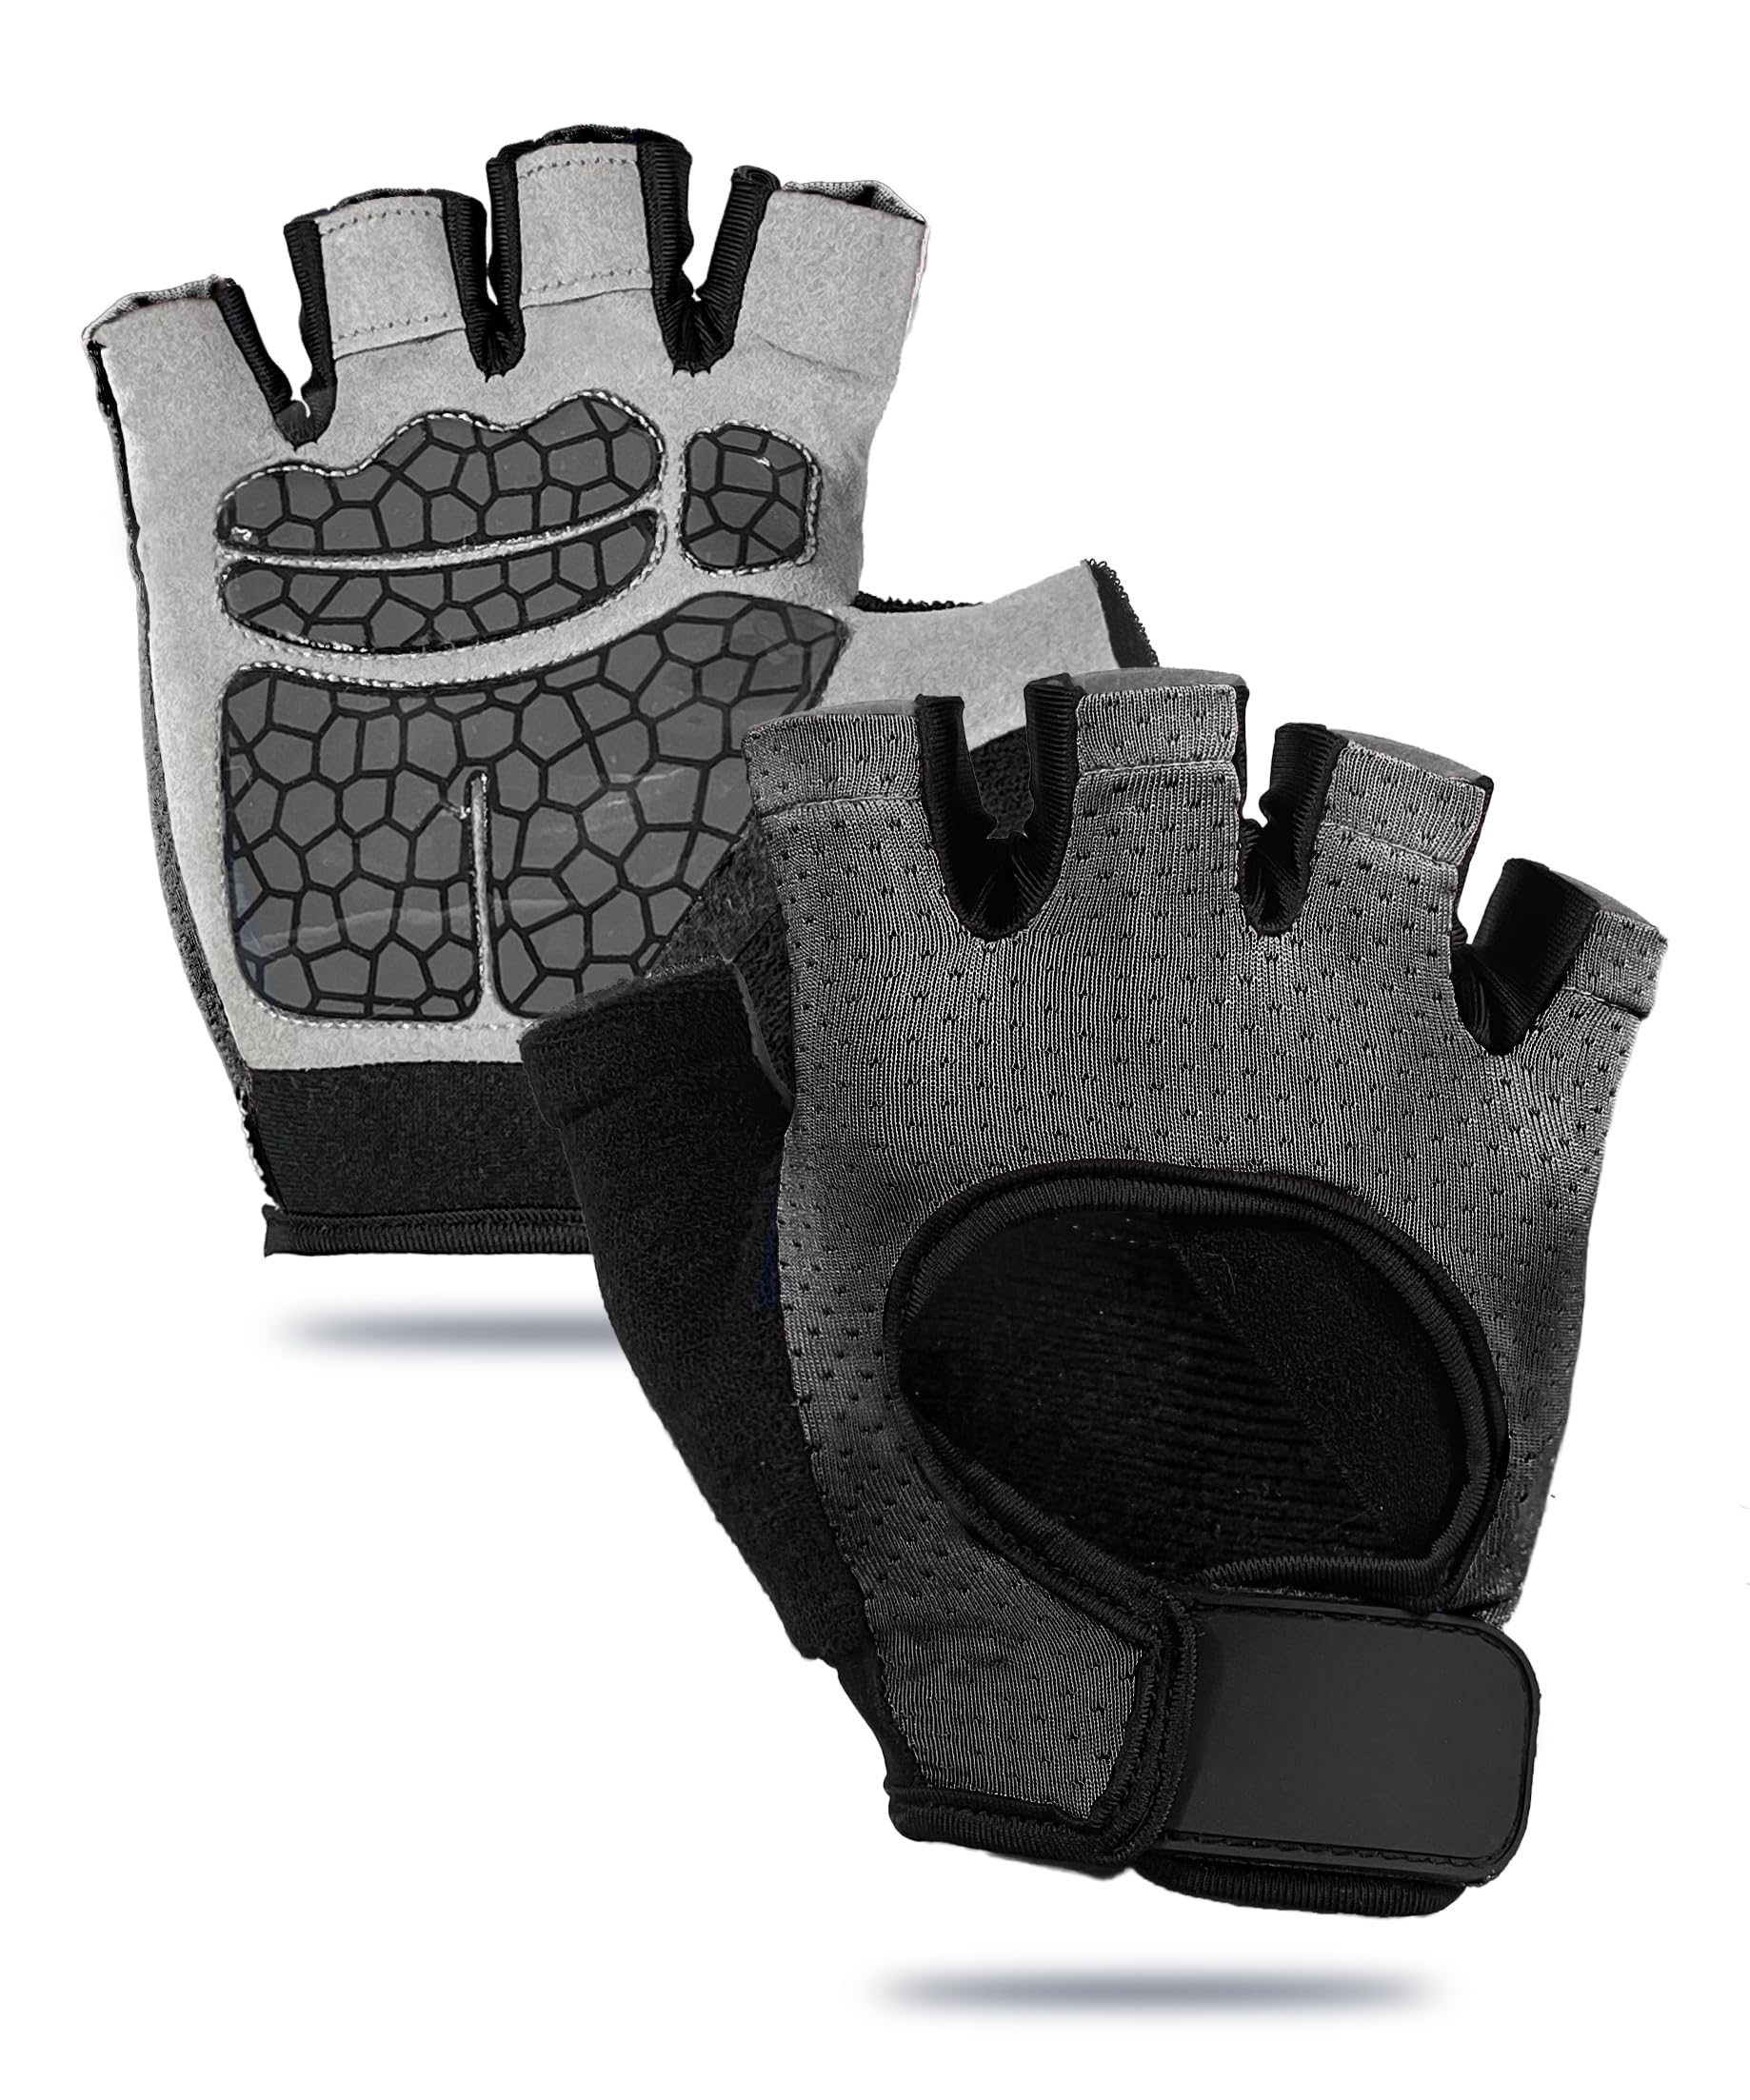  sunnex Gym Gloves, Workout Gloves, Fingerless Gloves